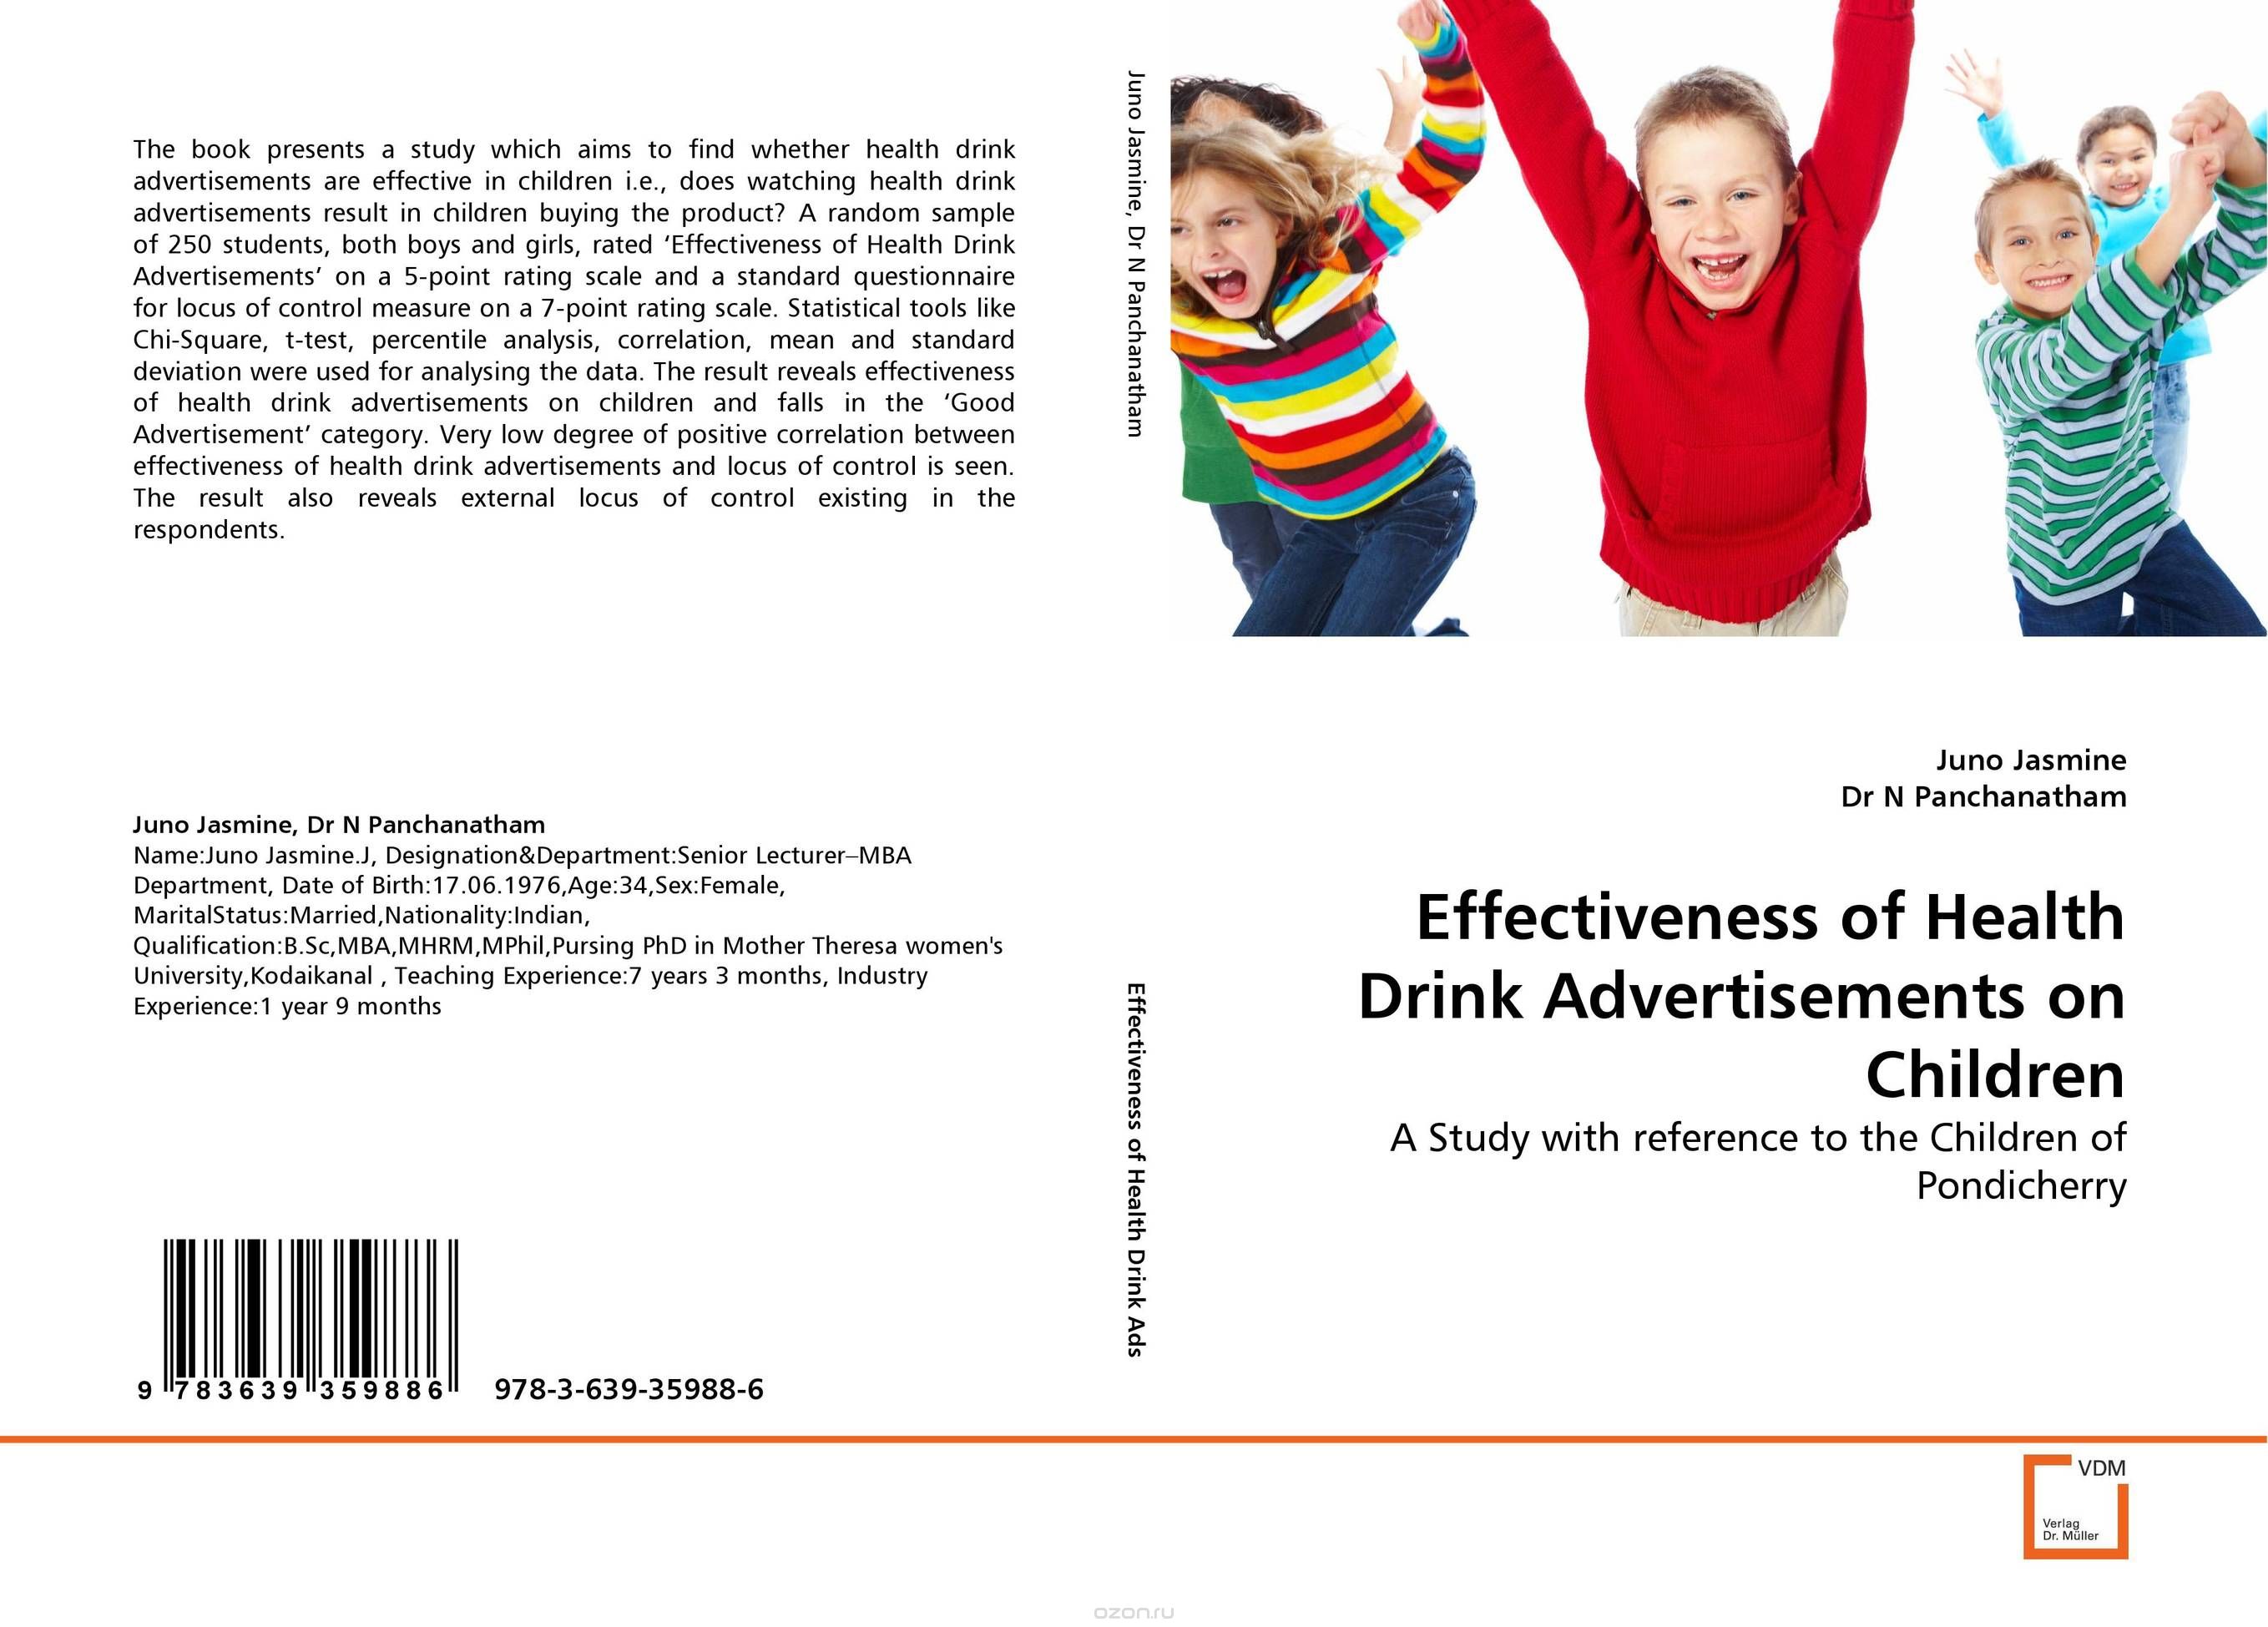 Effectiveness of Health Drink Advertisements on Children